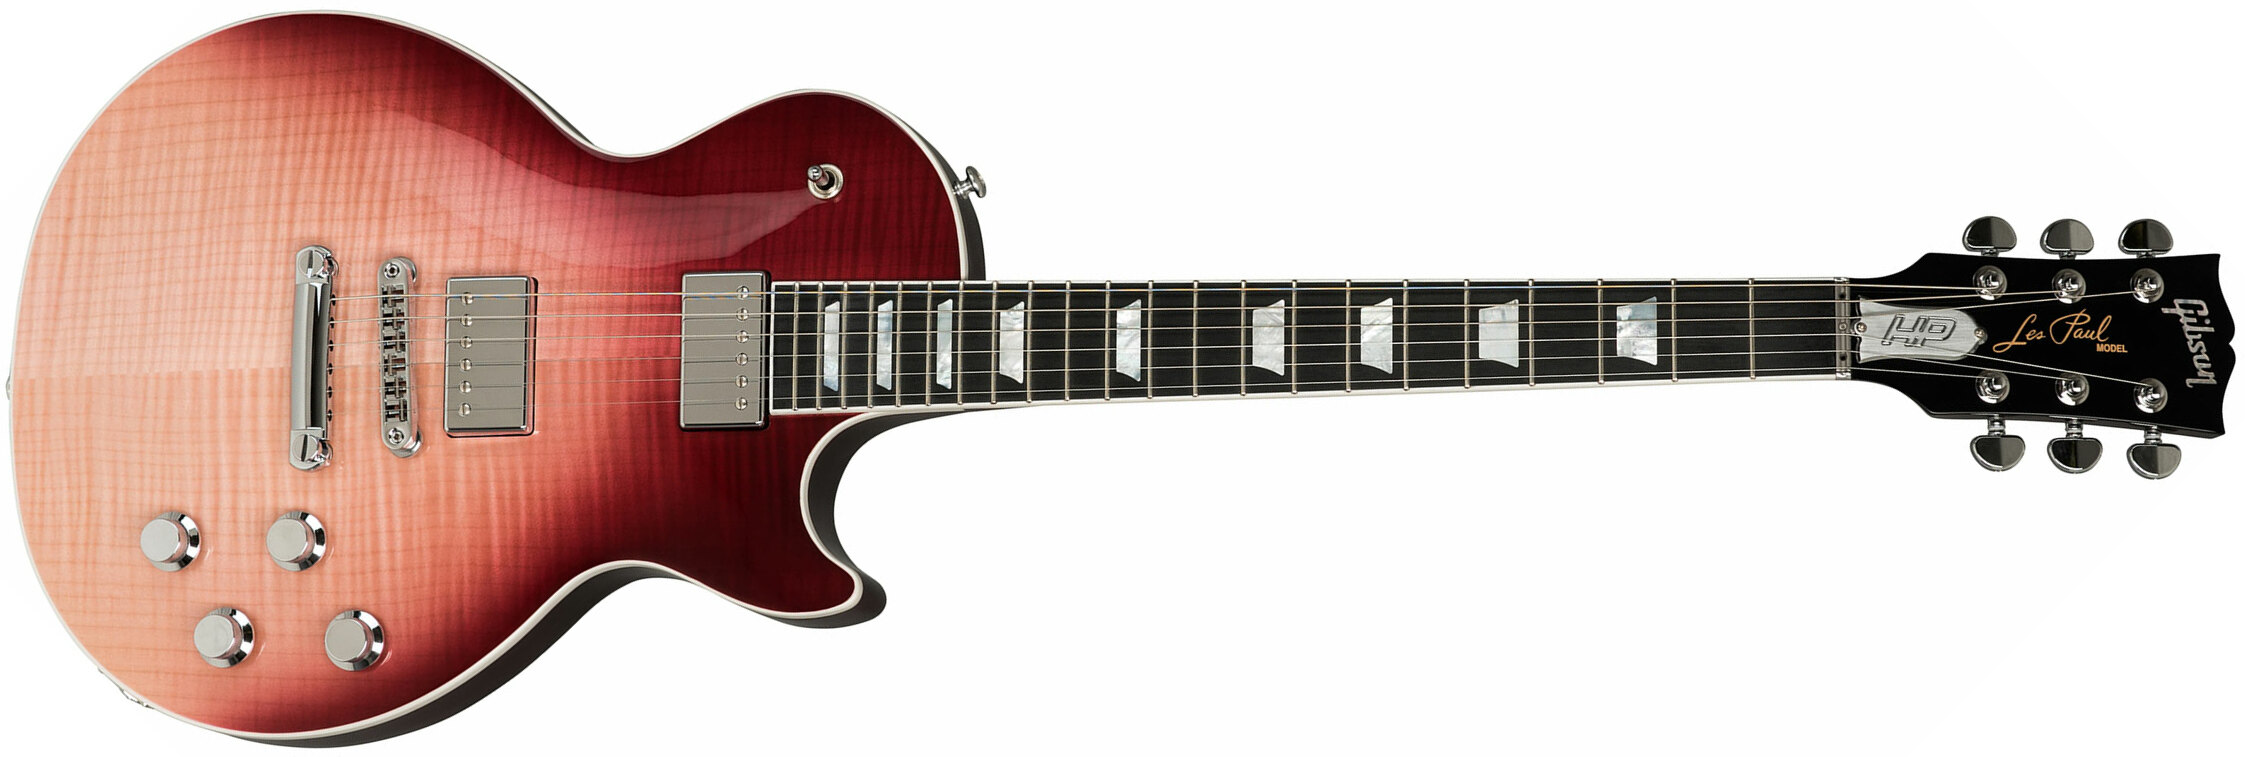 Gibson Les Paul Standard Hp-ii 2018 2h Ht Ric - Hot Pink Fade - Guitare Électrique Single Cut - Main picture